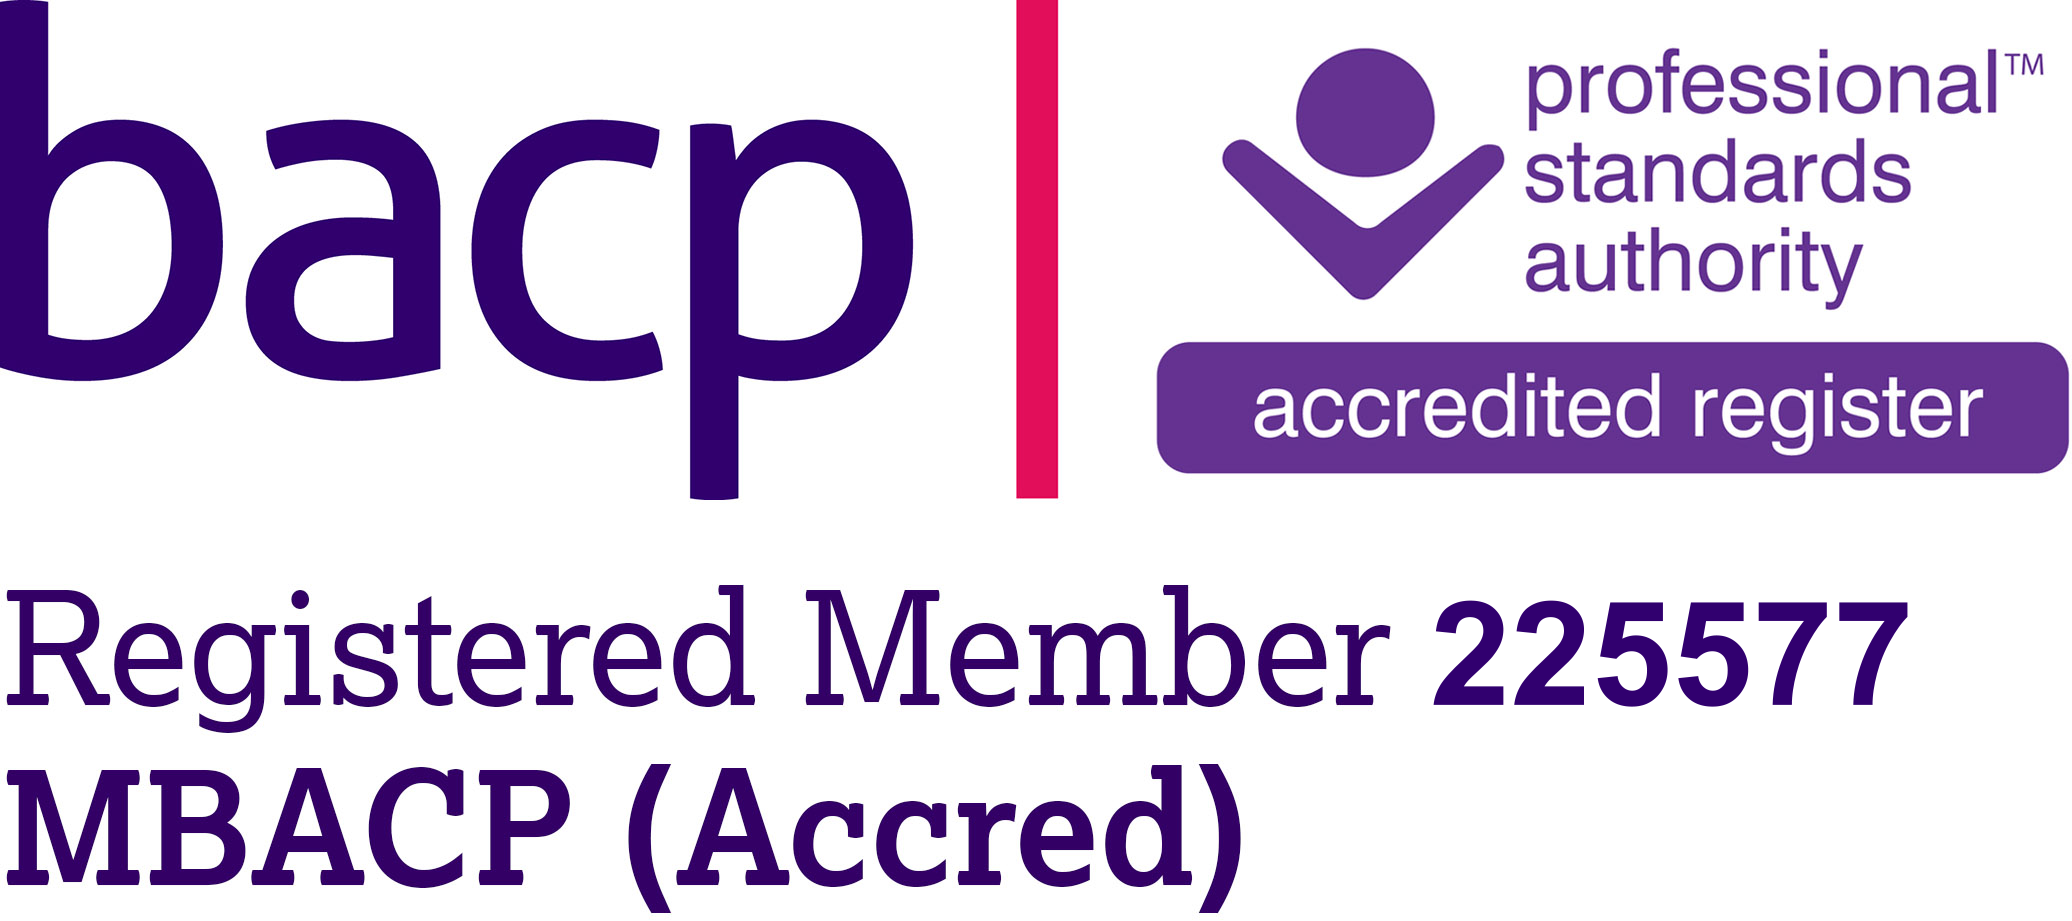 Janine BACP Membership Logo